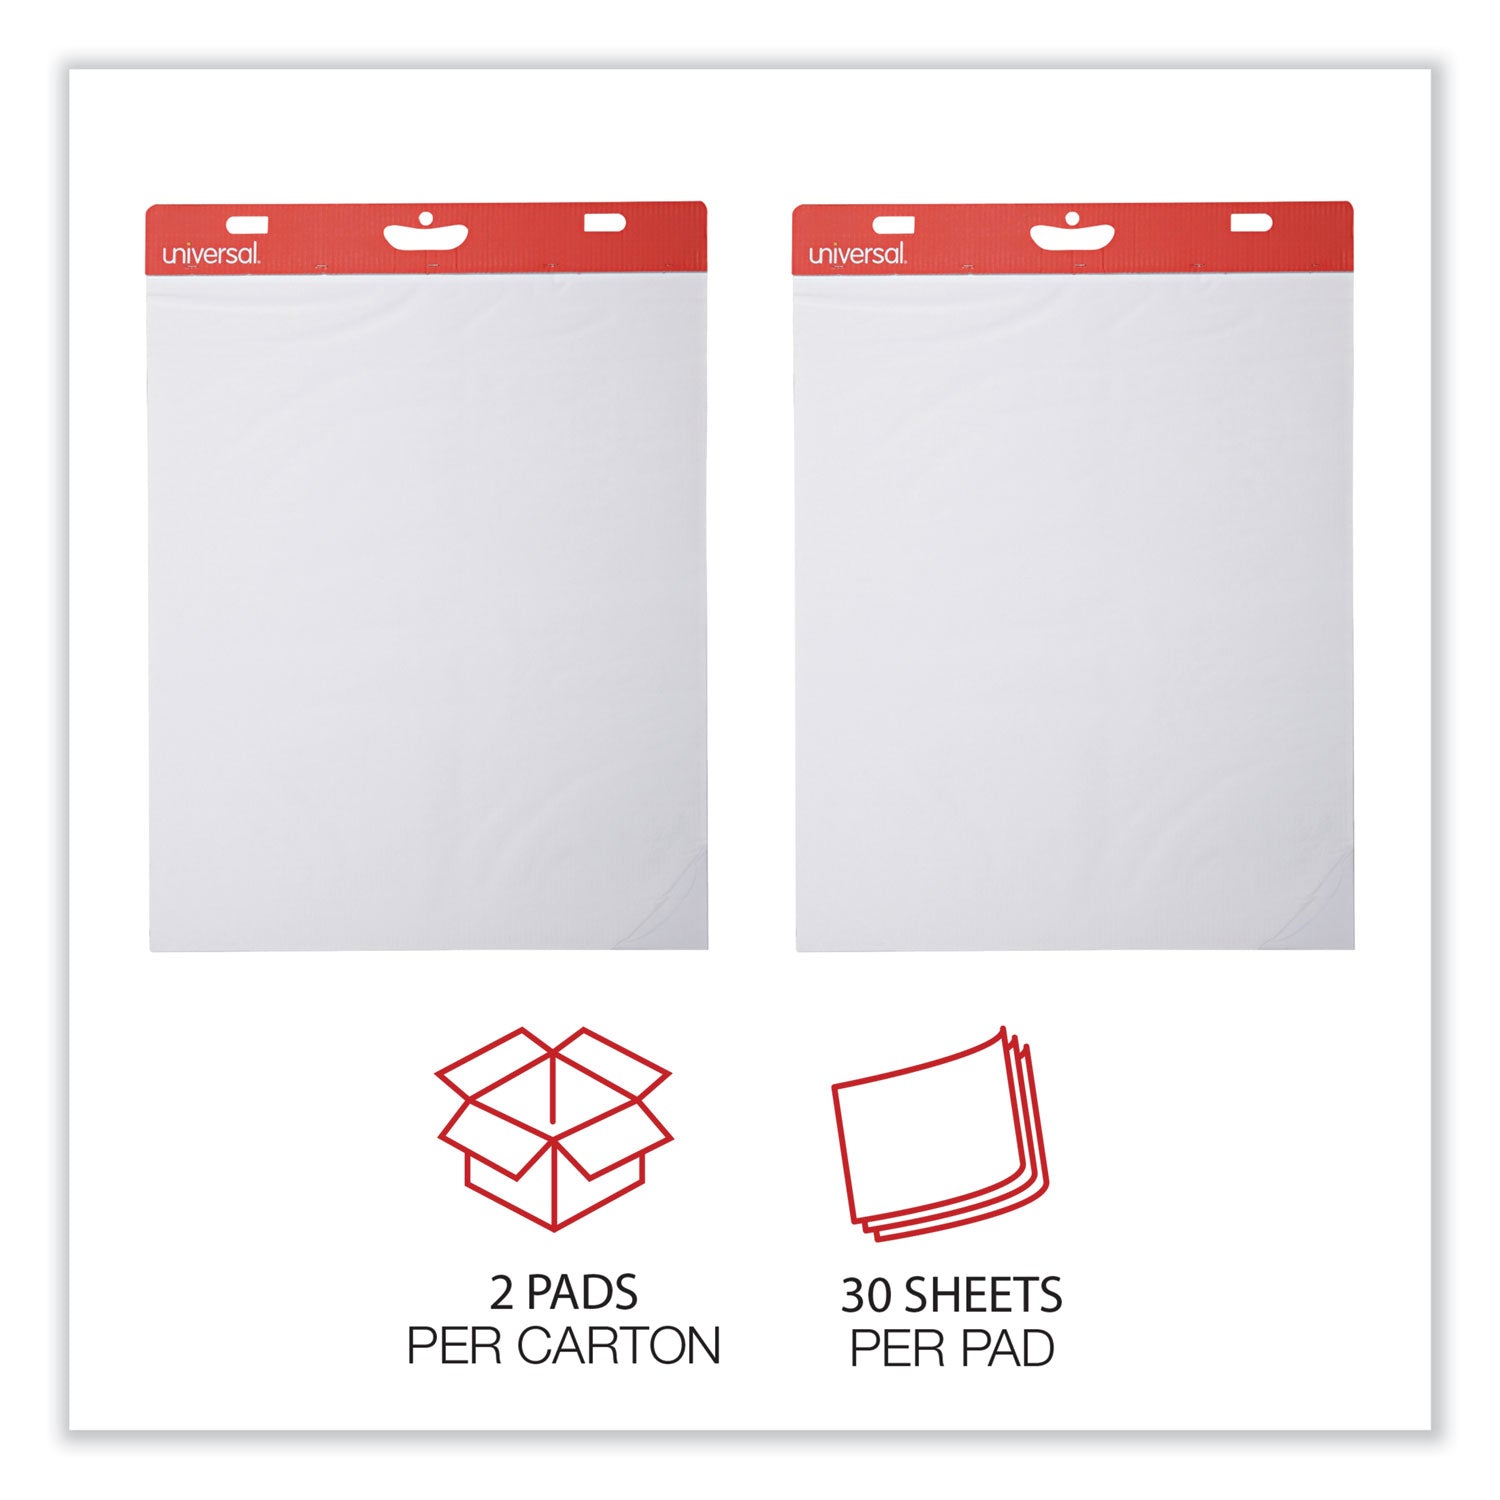 Self-Stick Easel Pad, Unruled, 25 x 30, White, 30 Sheets, 2/Carton - 